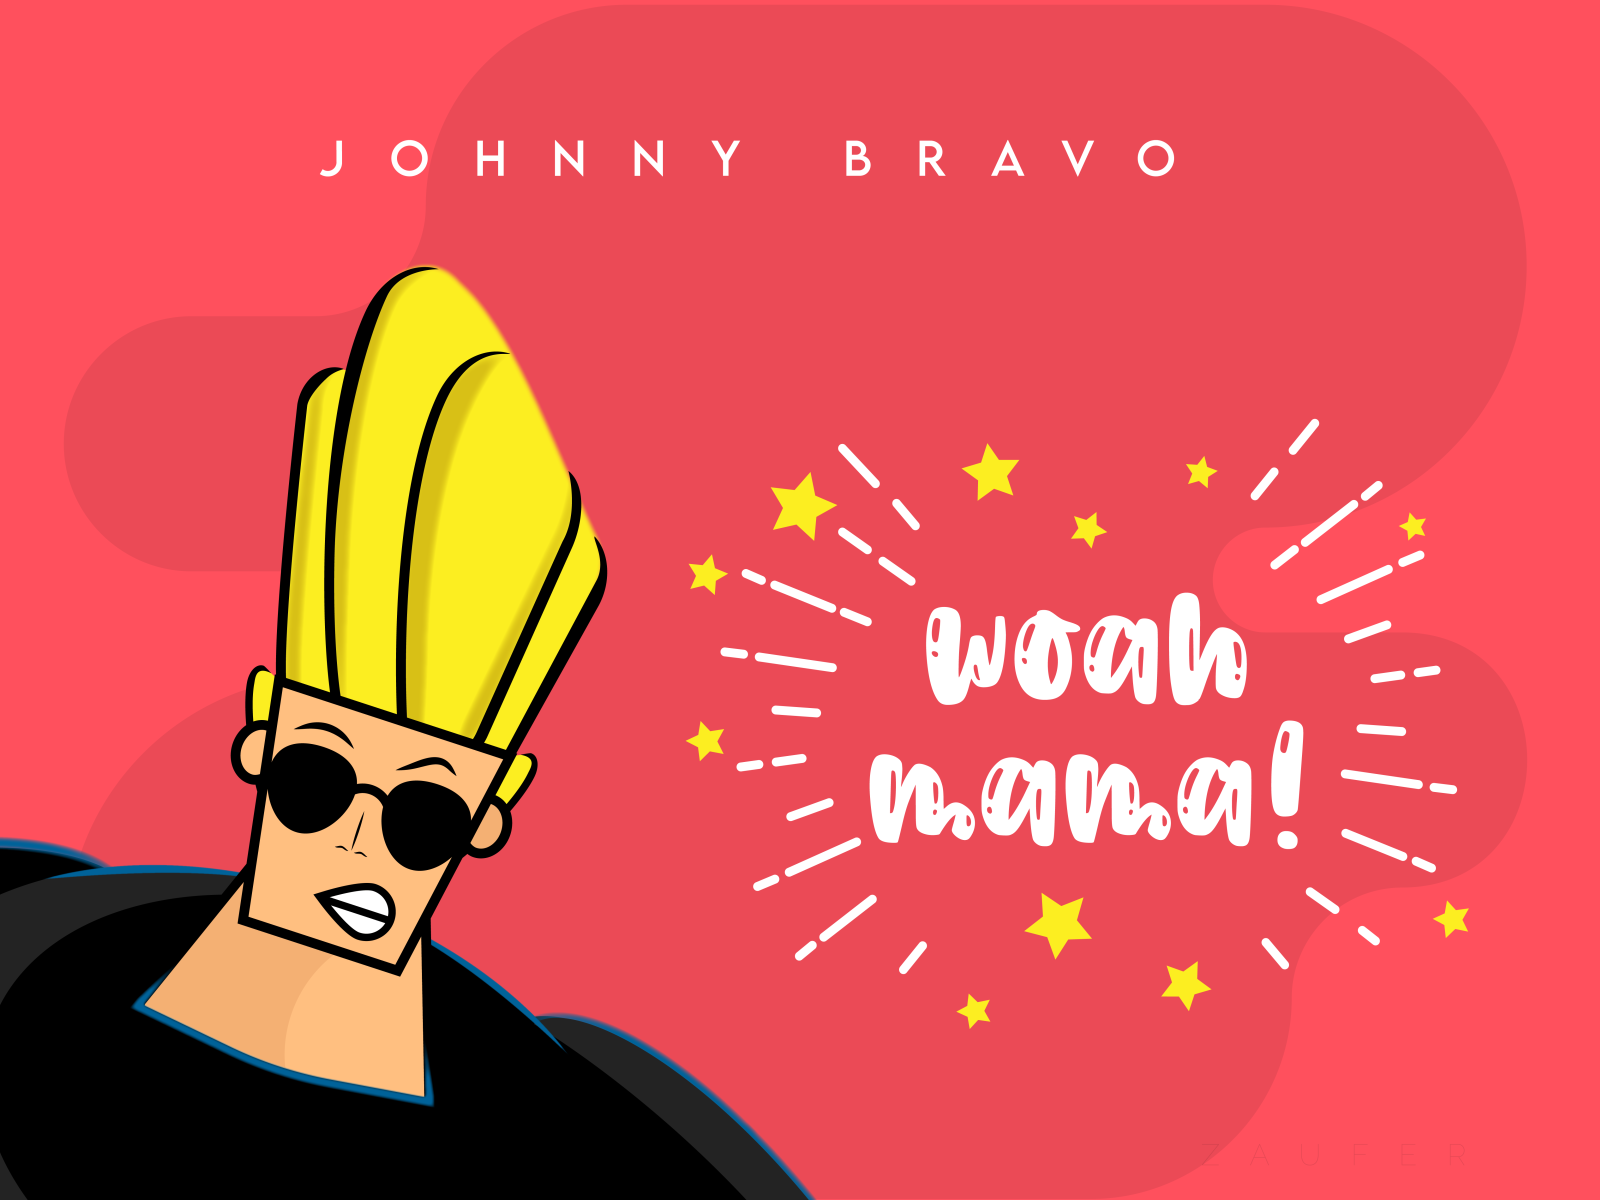 Johnny Bravo Projects :: Photos, videos, logos, illustrations and branding  :: Behance